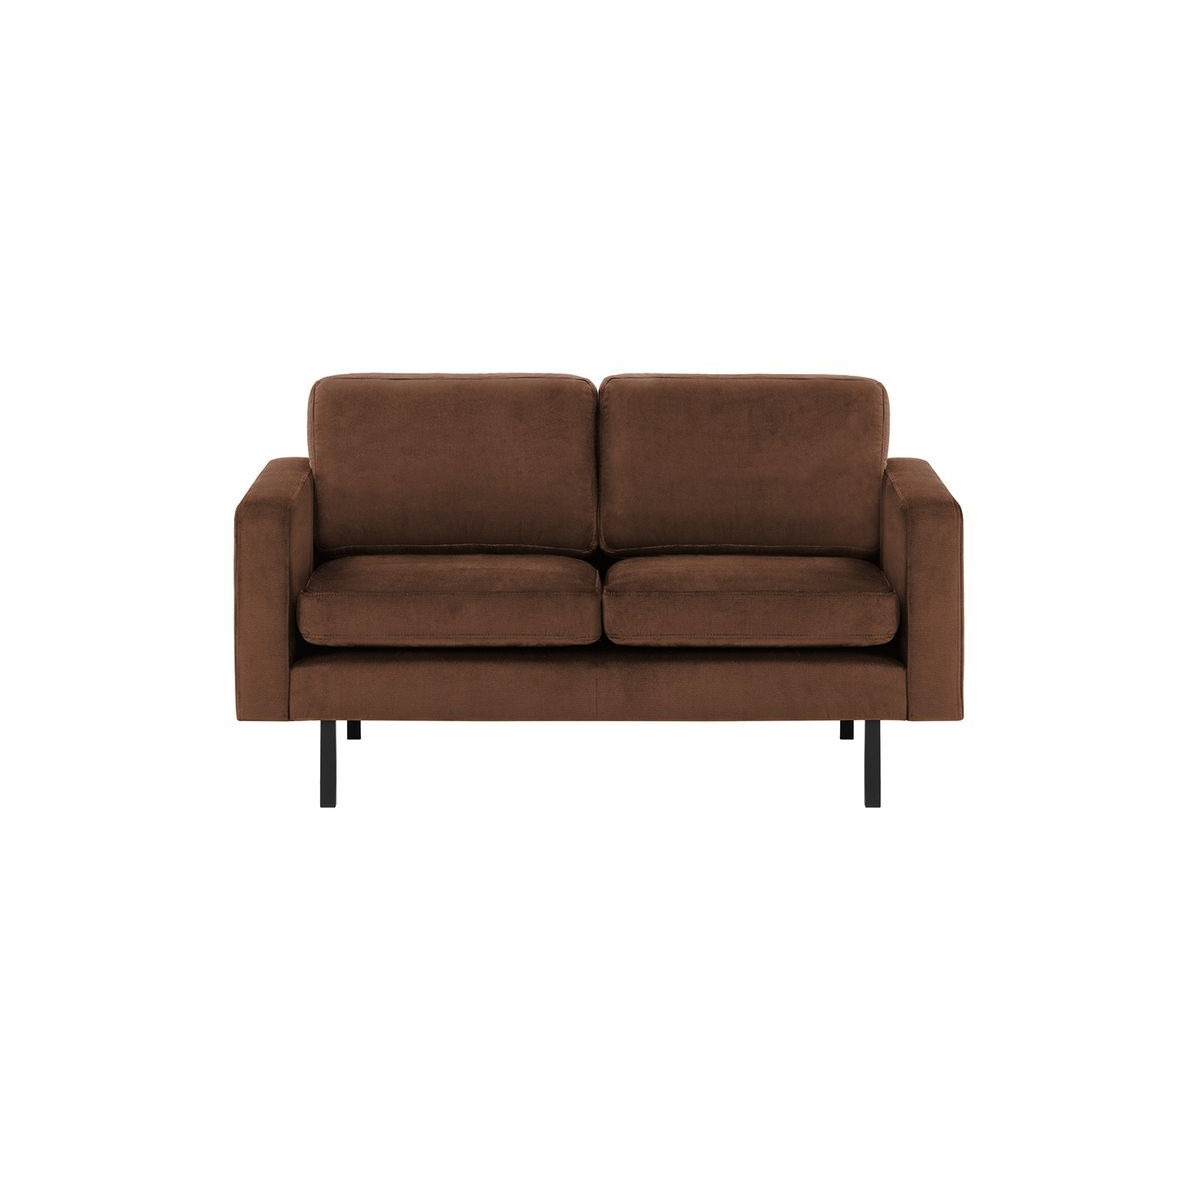 Lioni 2 Seater Sofa, brown - image 1